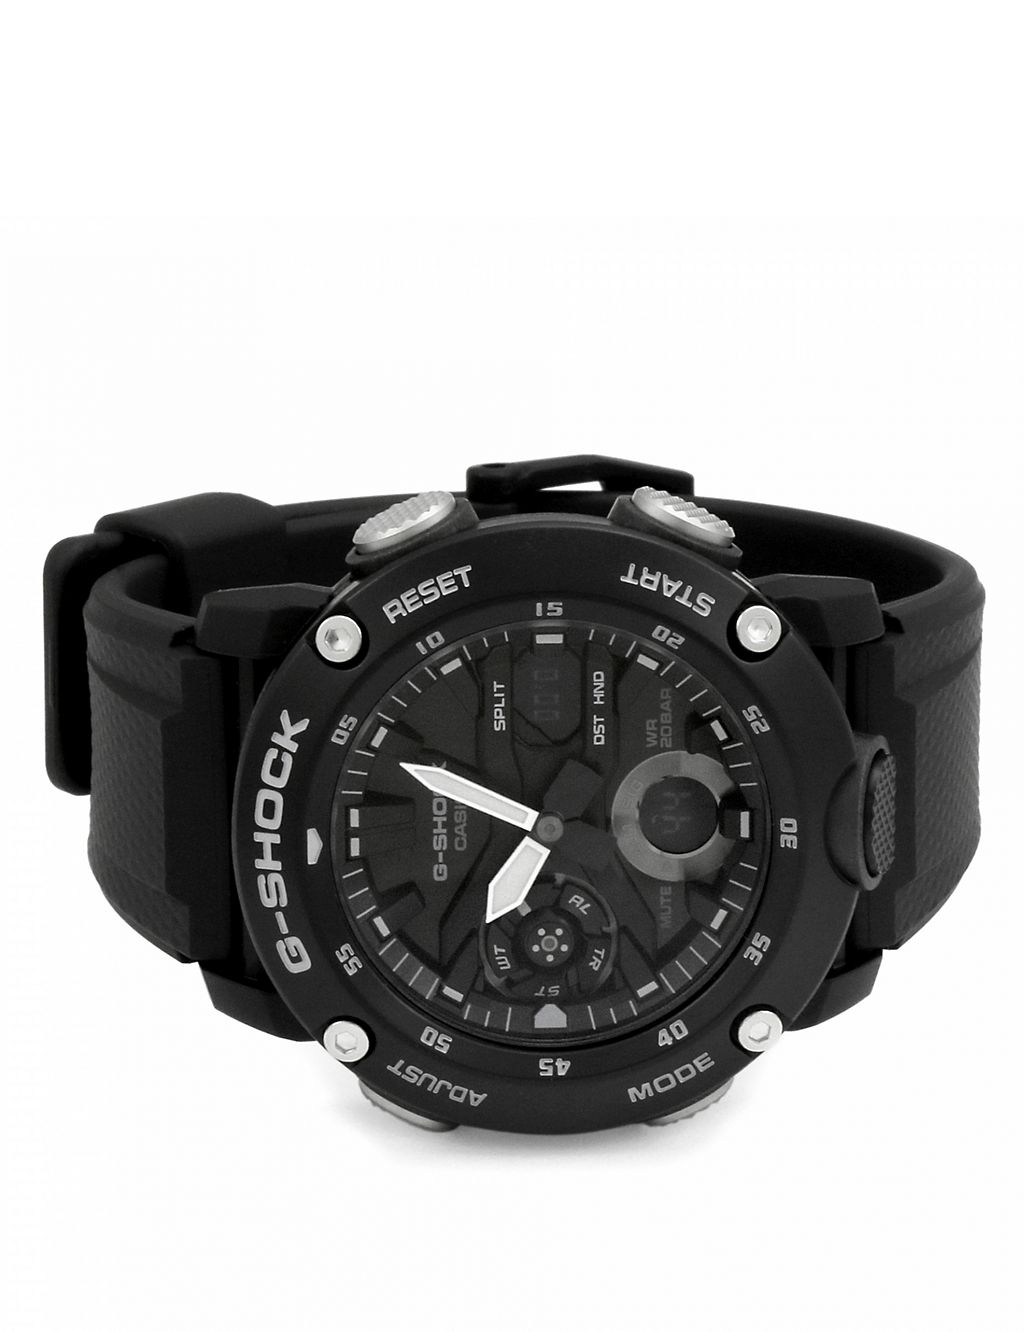 Casio G-Shock Waterproof Watch 5 of 5